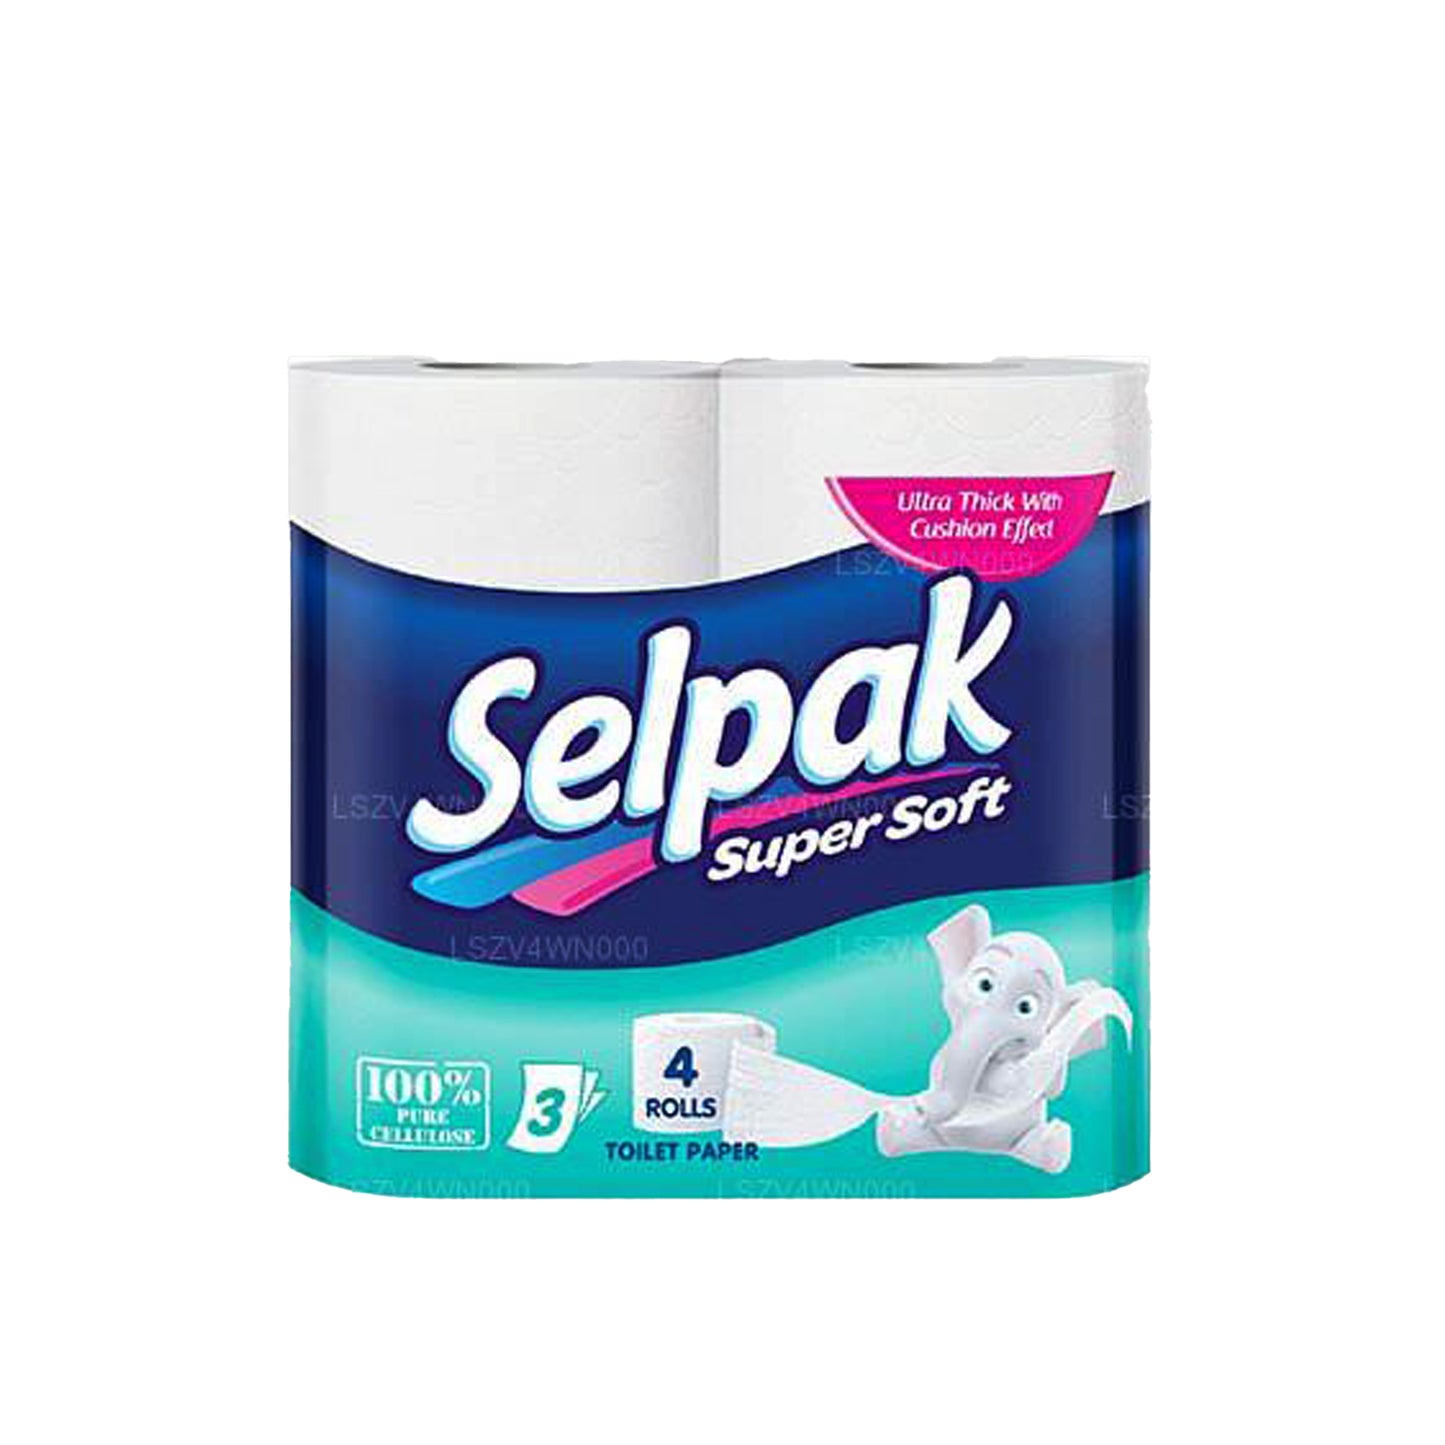 Selpak toiletpapier Super Soft Roll (4 stuks)